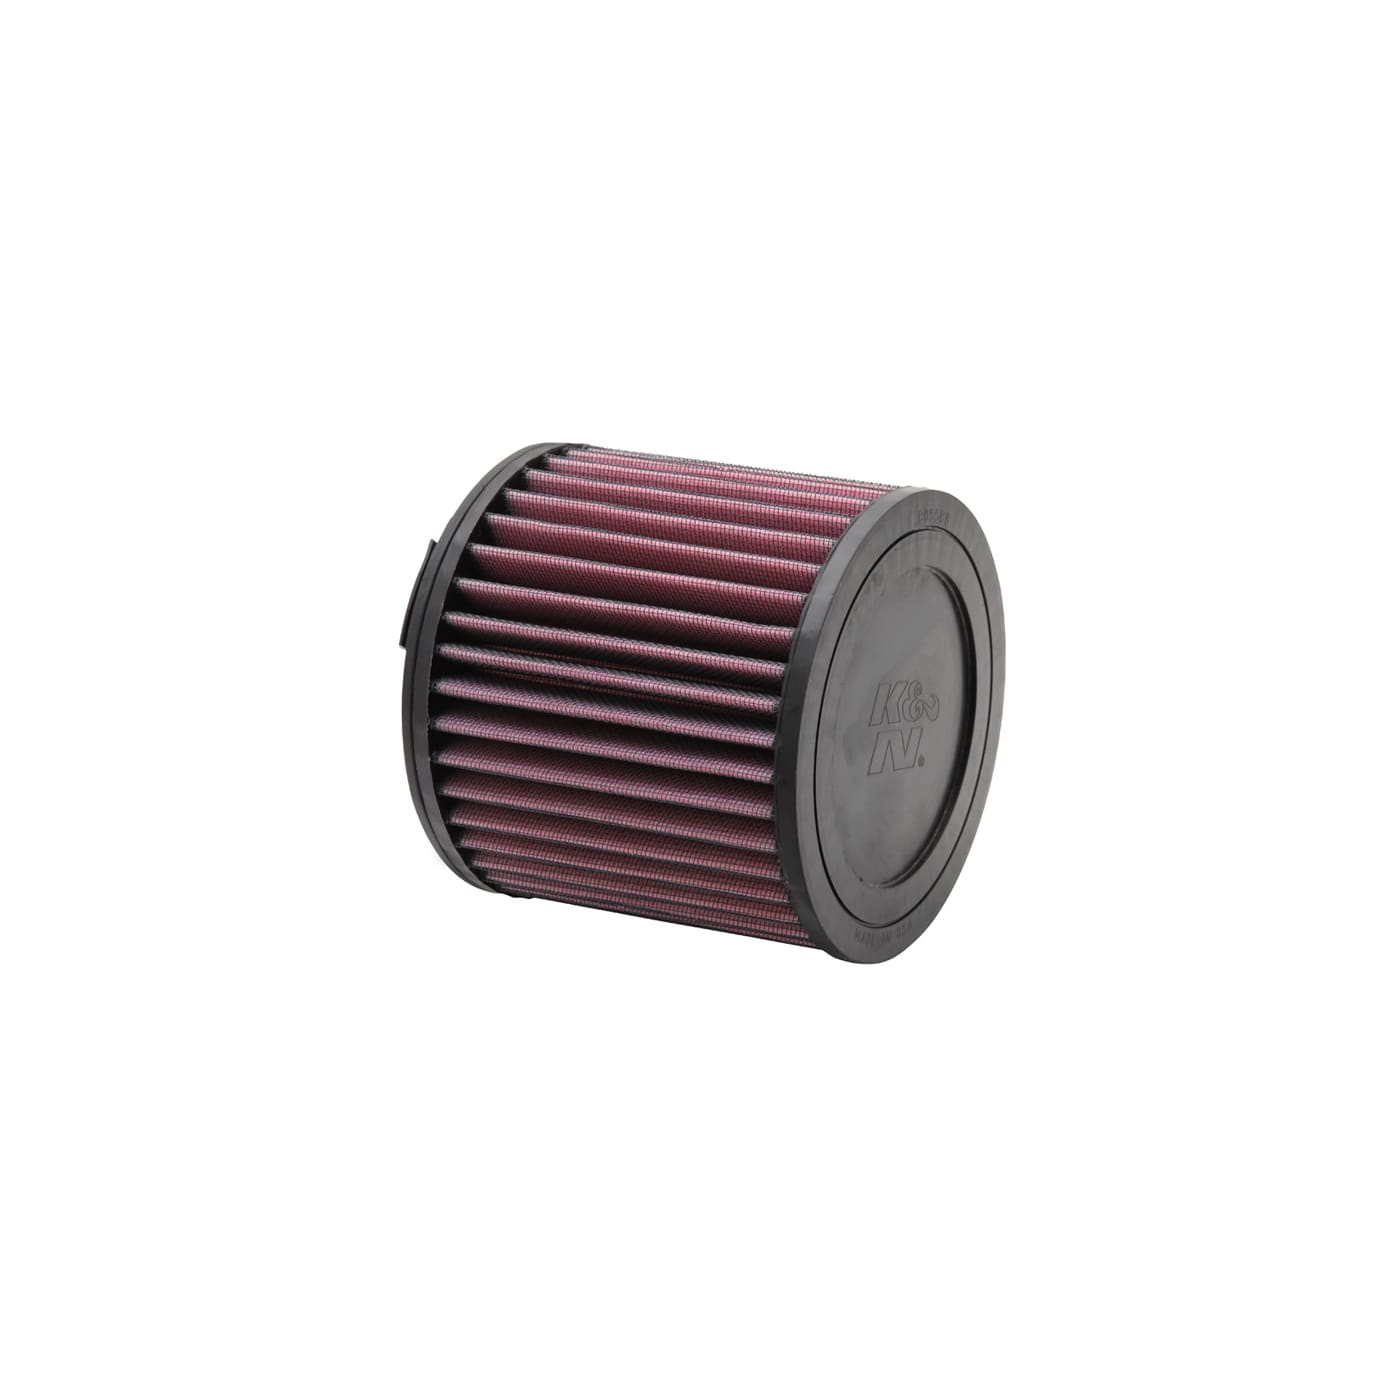 K&n filtros de aire deportivos filtro intercambio e-2877